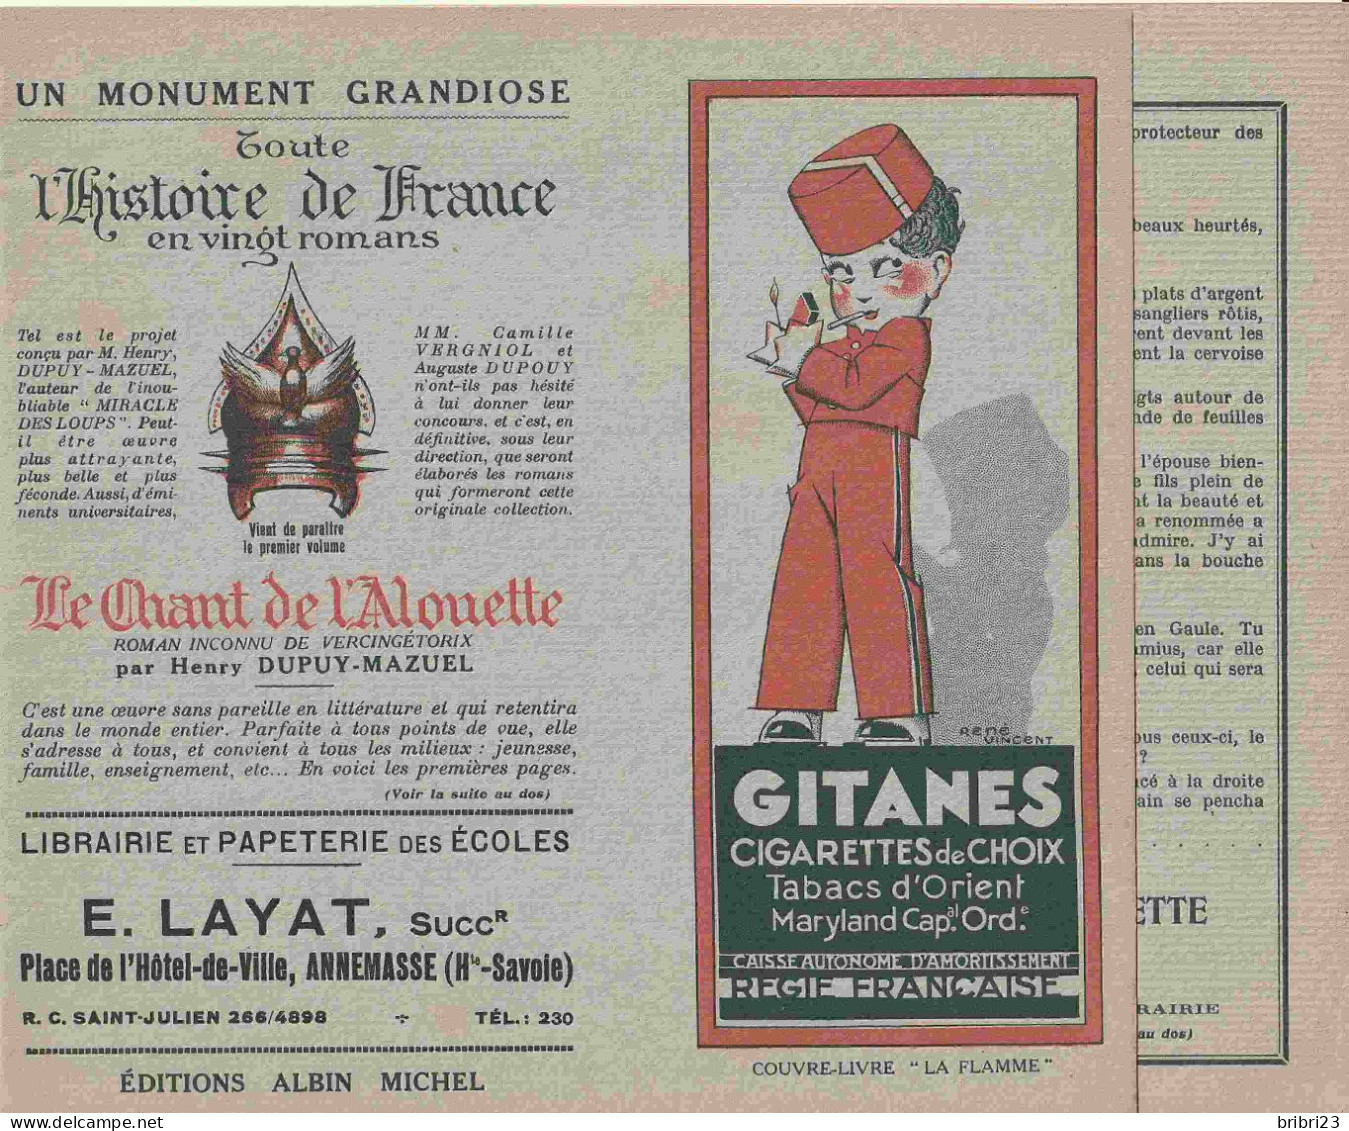 COUVRE-LIVRE " LA FLAMME " PUBLICITE LIBRAIRIE Annemasse - CIGARETTES GITANES BALTO - Tabak & Cigaretten